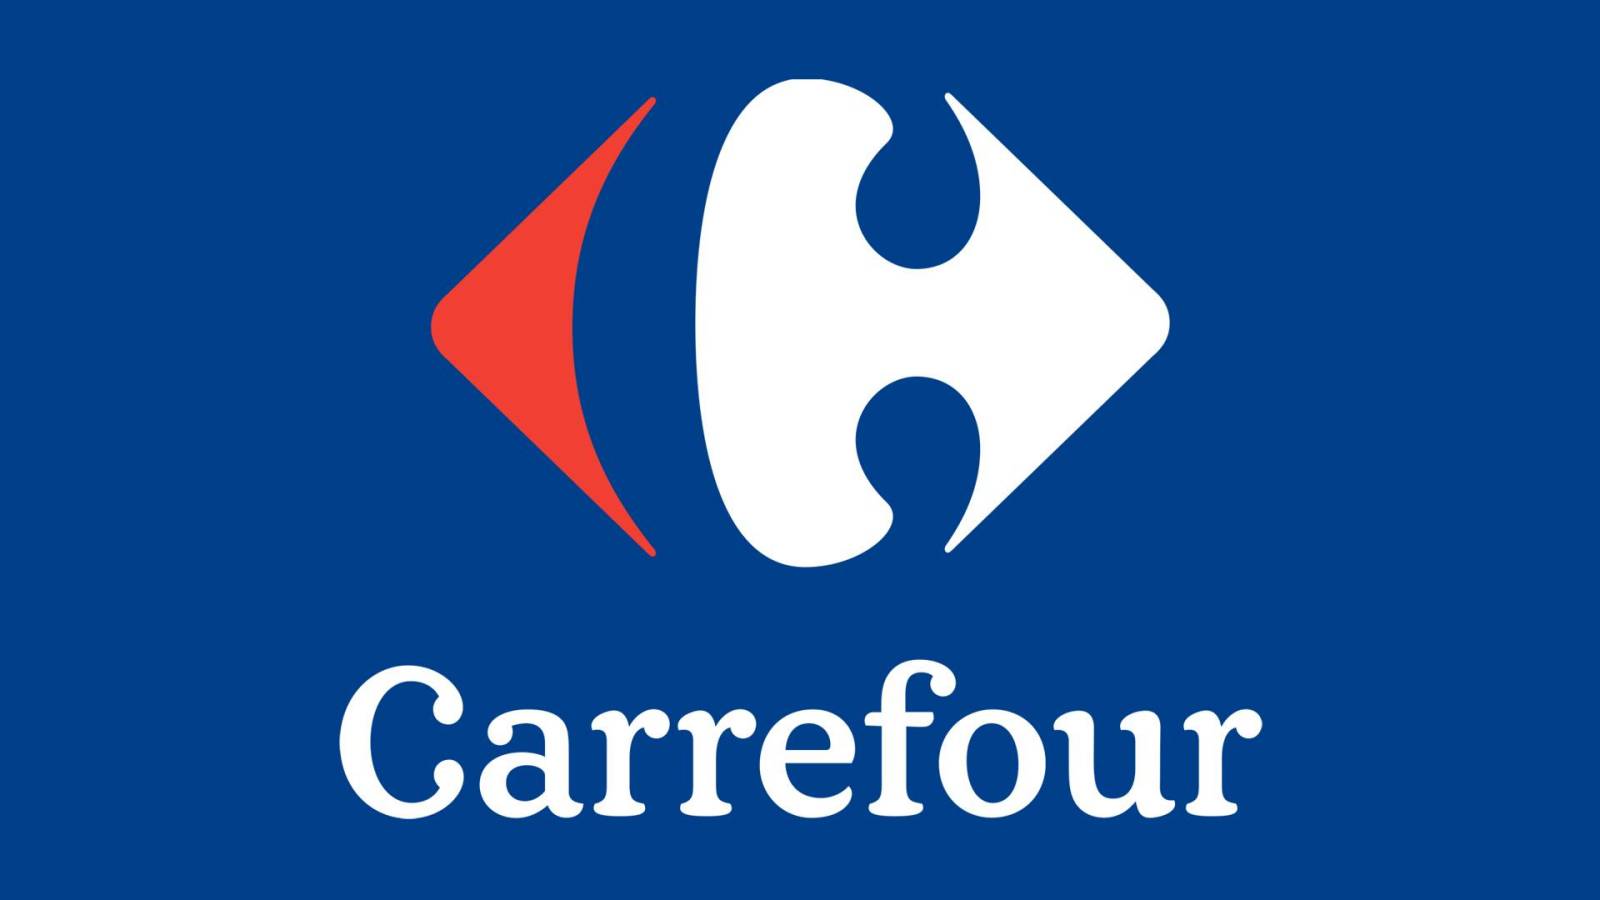 Carrefour sostanziale